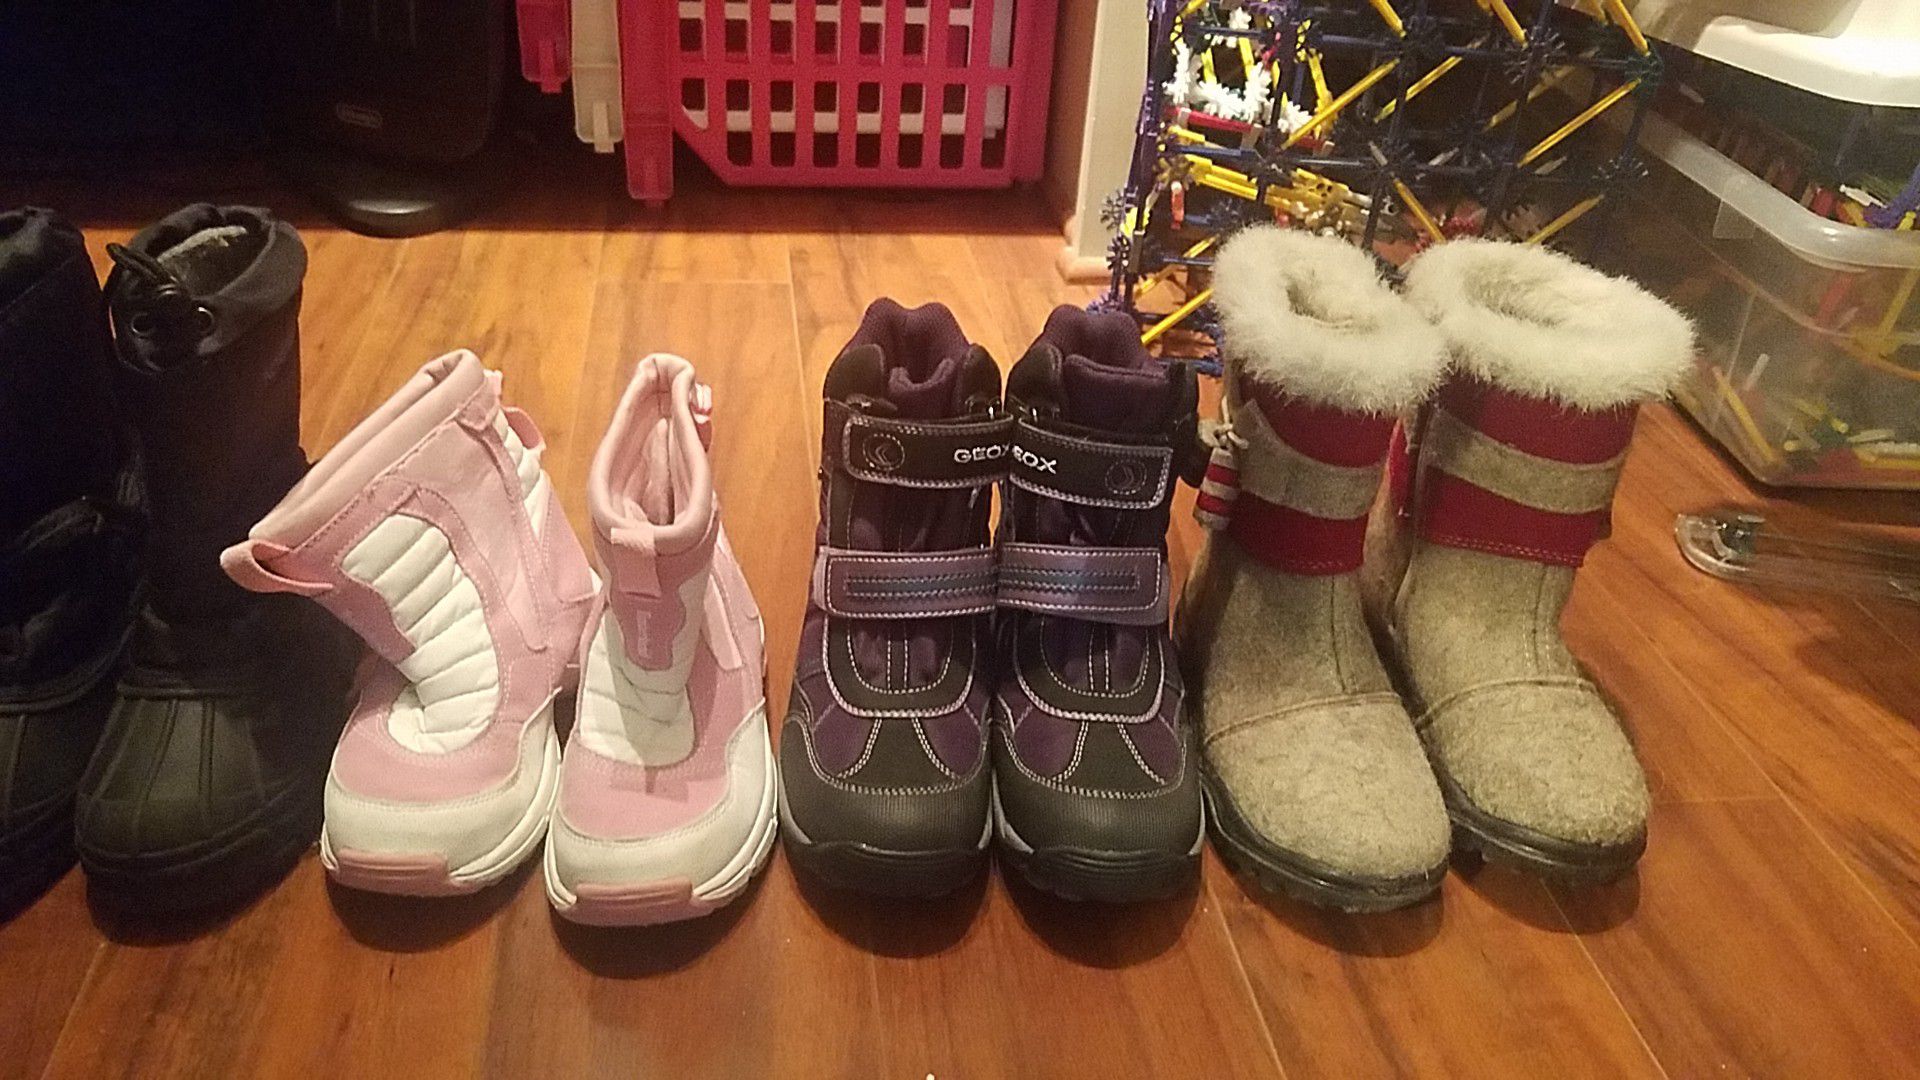 Winter/snow boots kids 13, 1, 1 1/2, 2